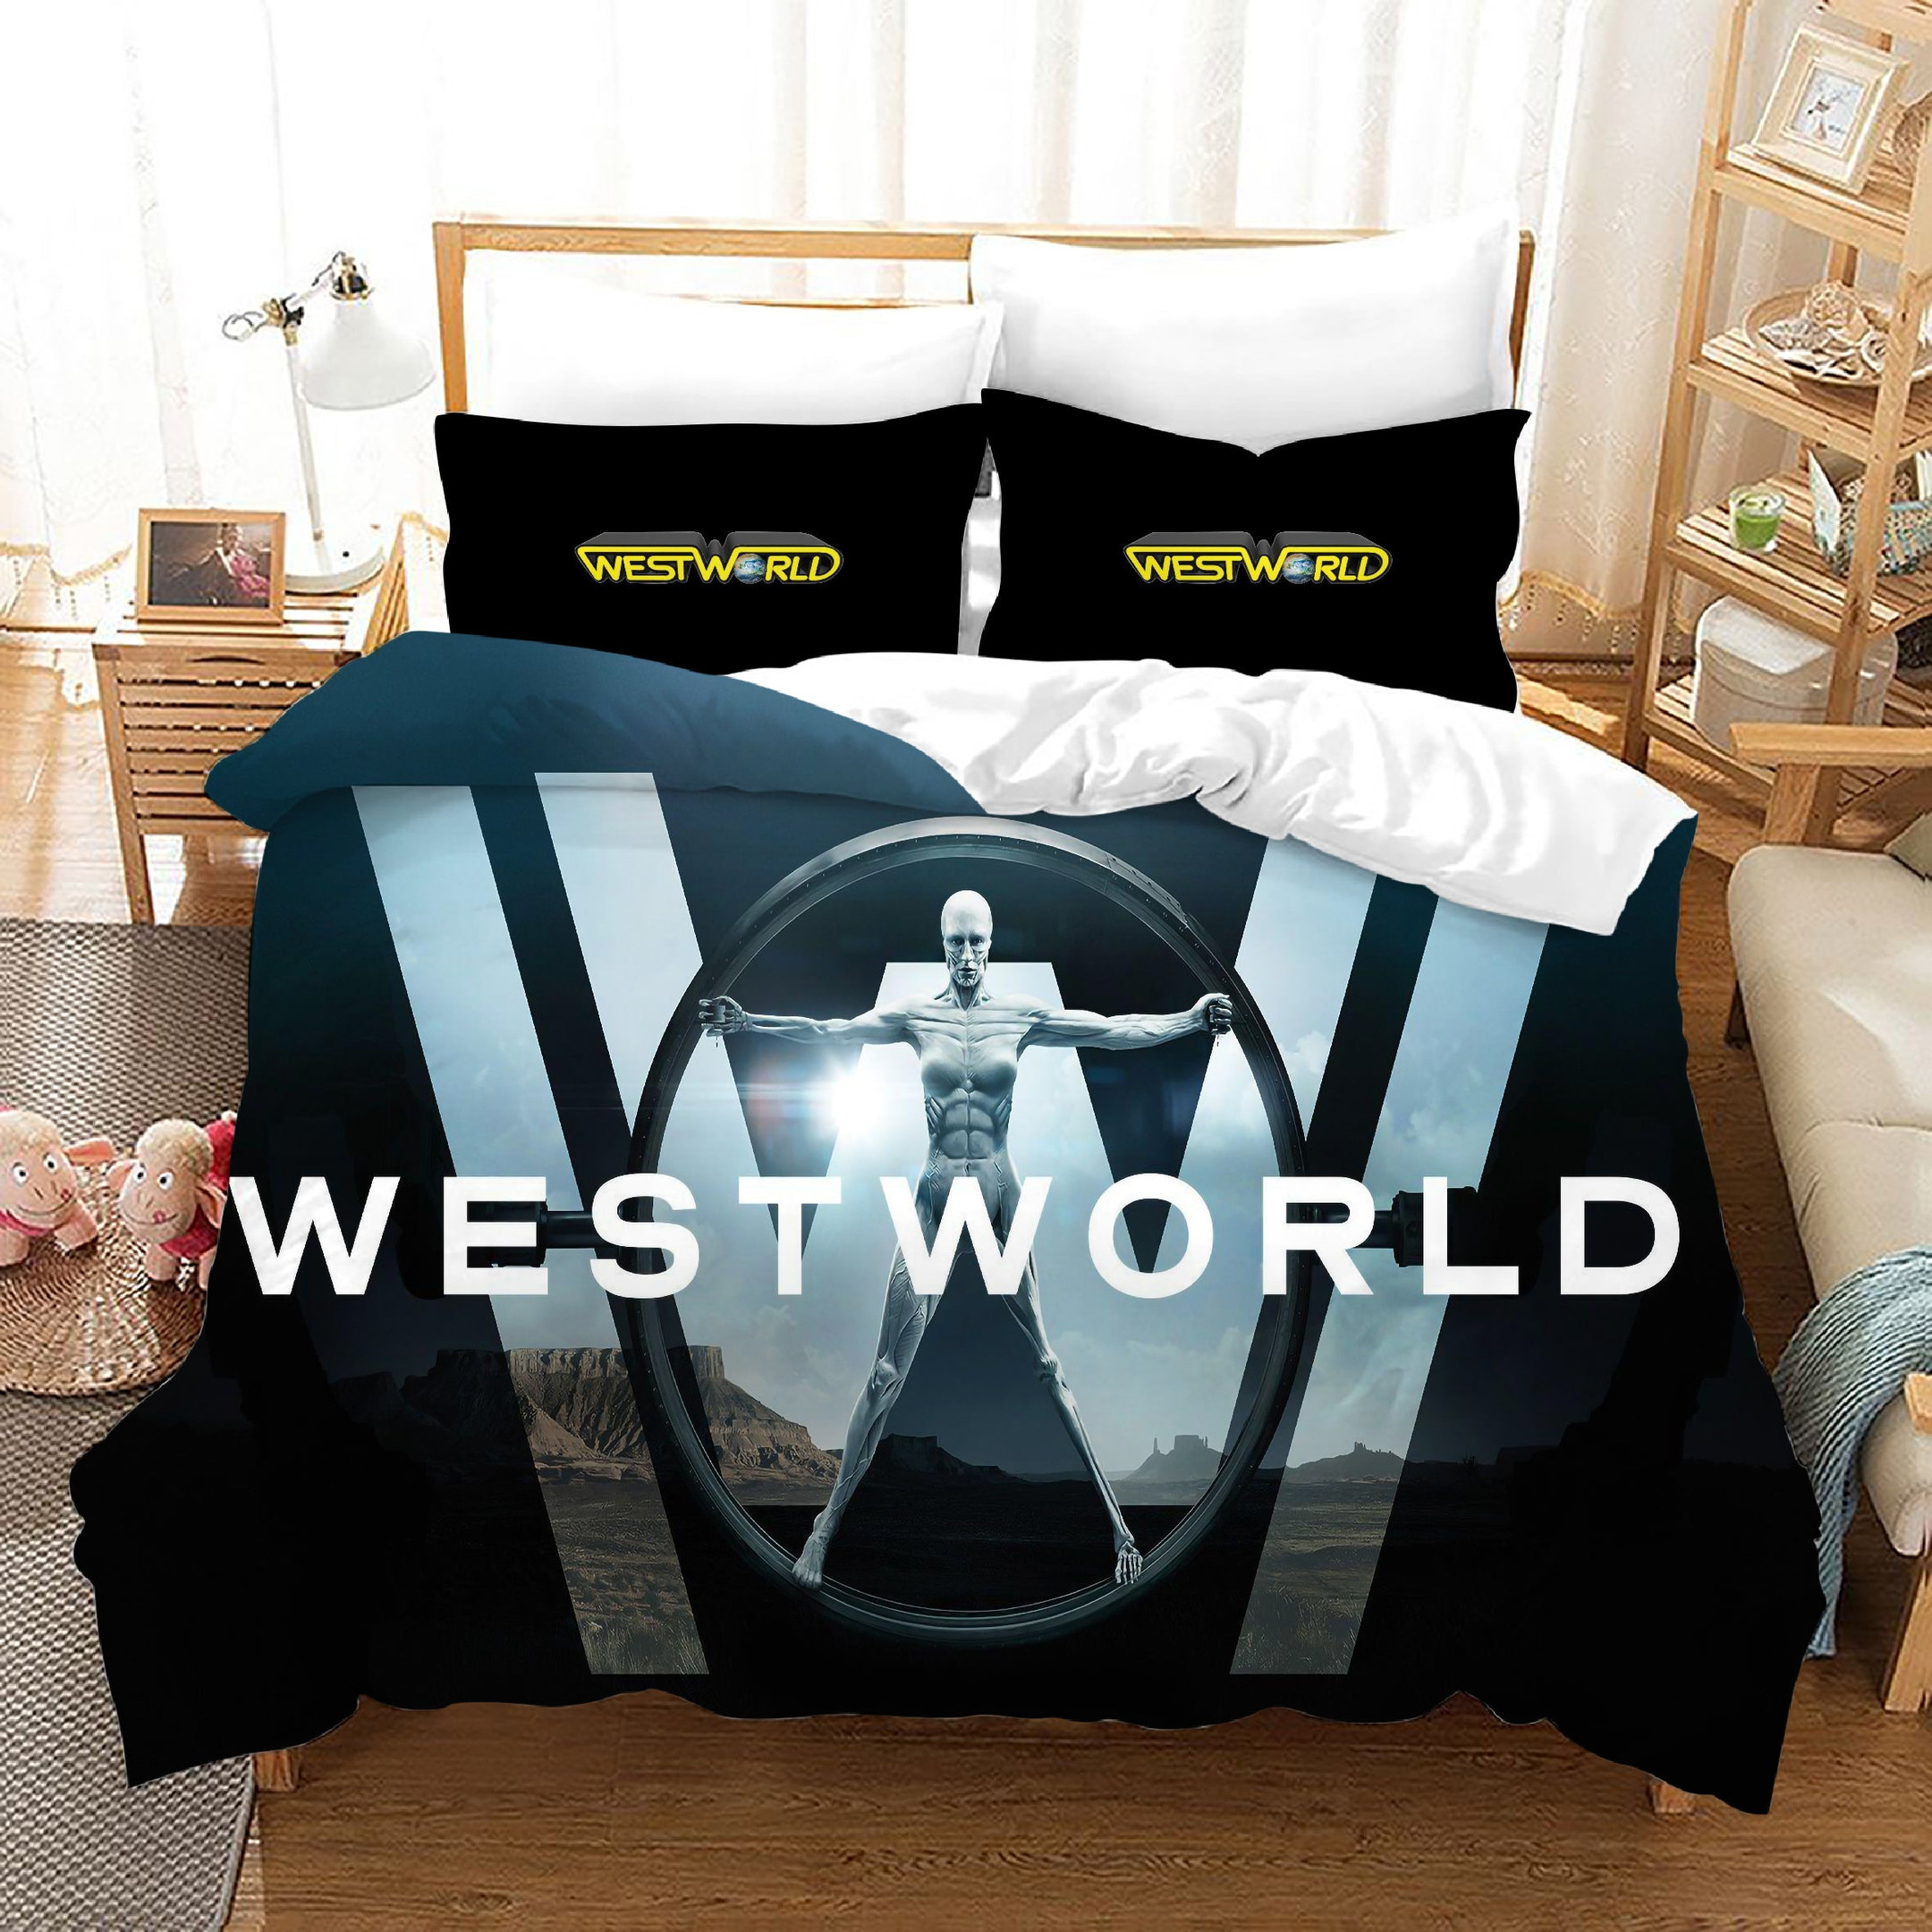 Westworld #1 Duvet Cover Quilt Cover Pillowcase Bedding Set Bed Linen Home Bedroom Decor